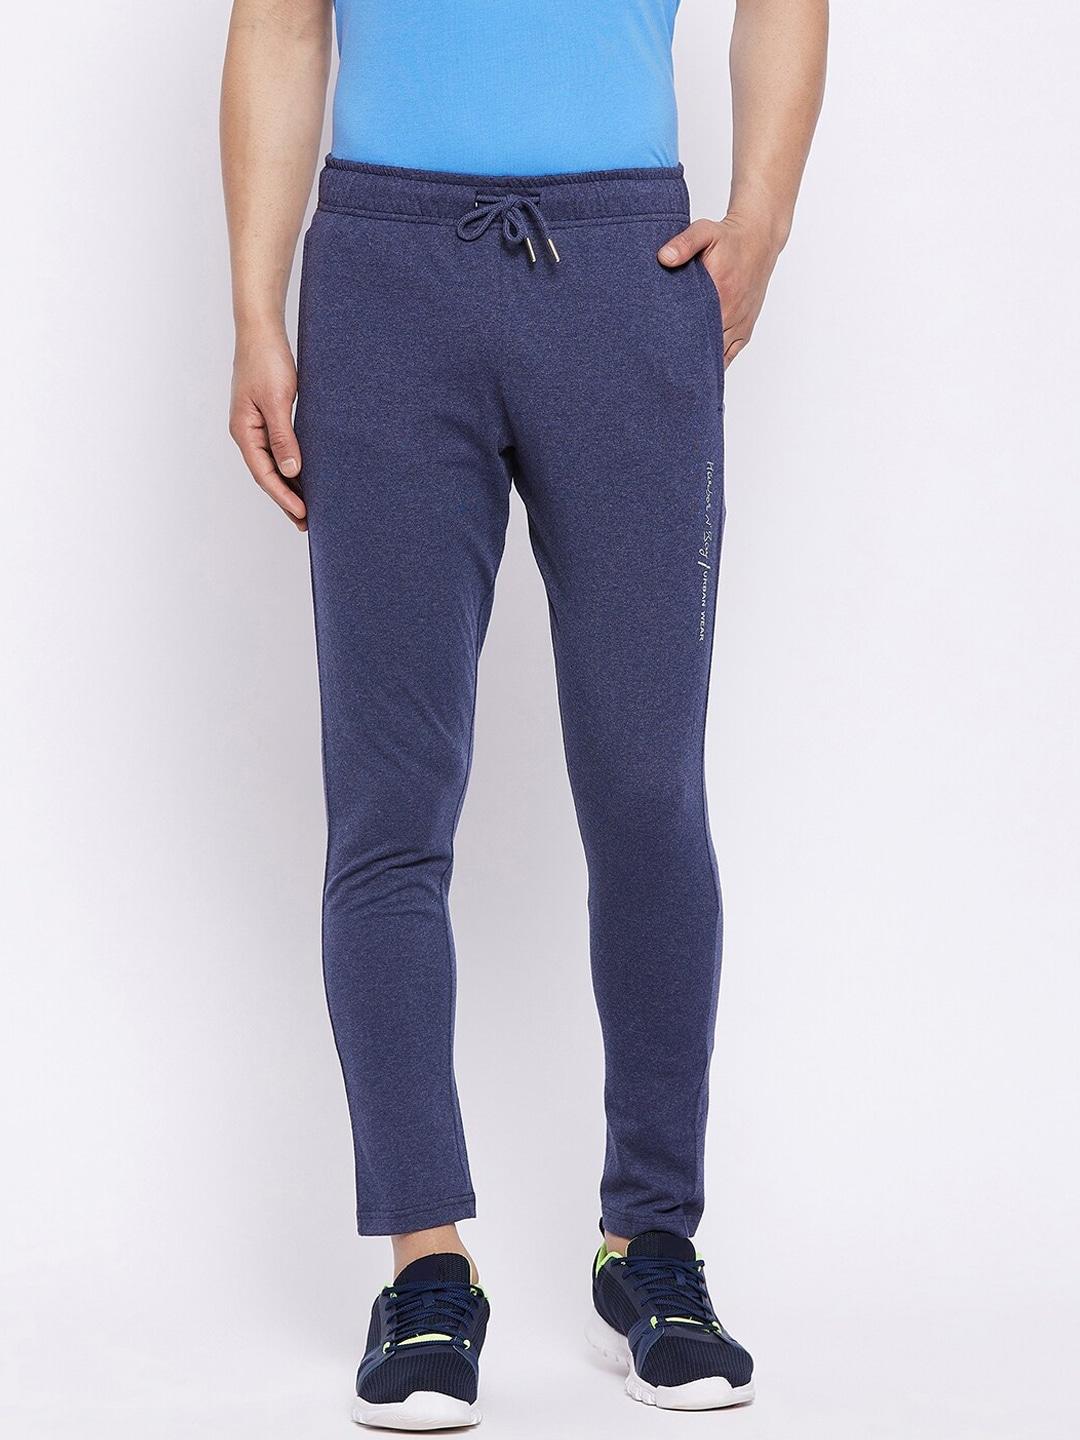 harbornbay-men-navy-blue-solid-cotton-track-pants